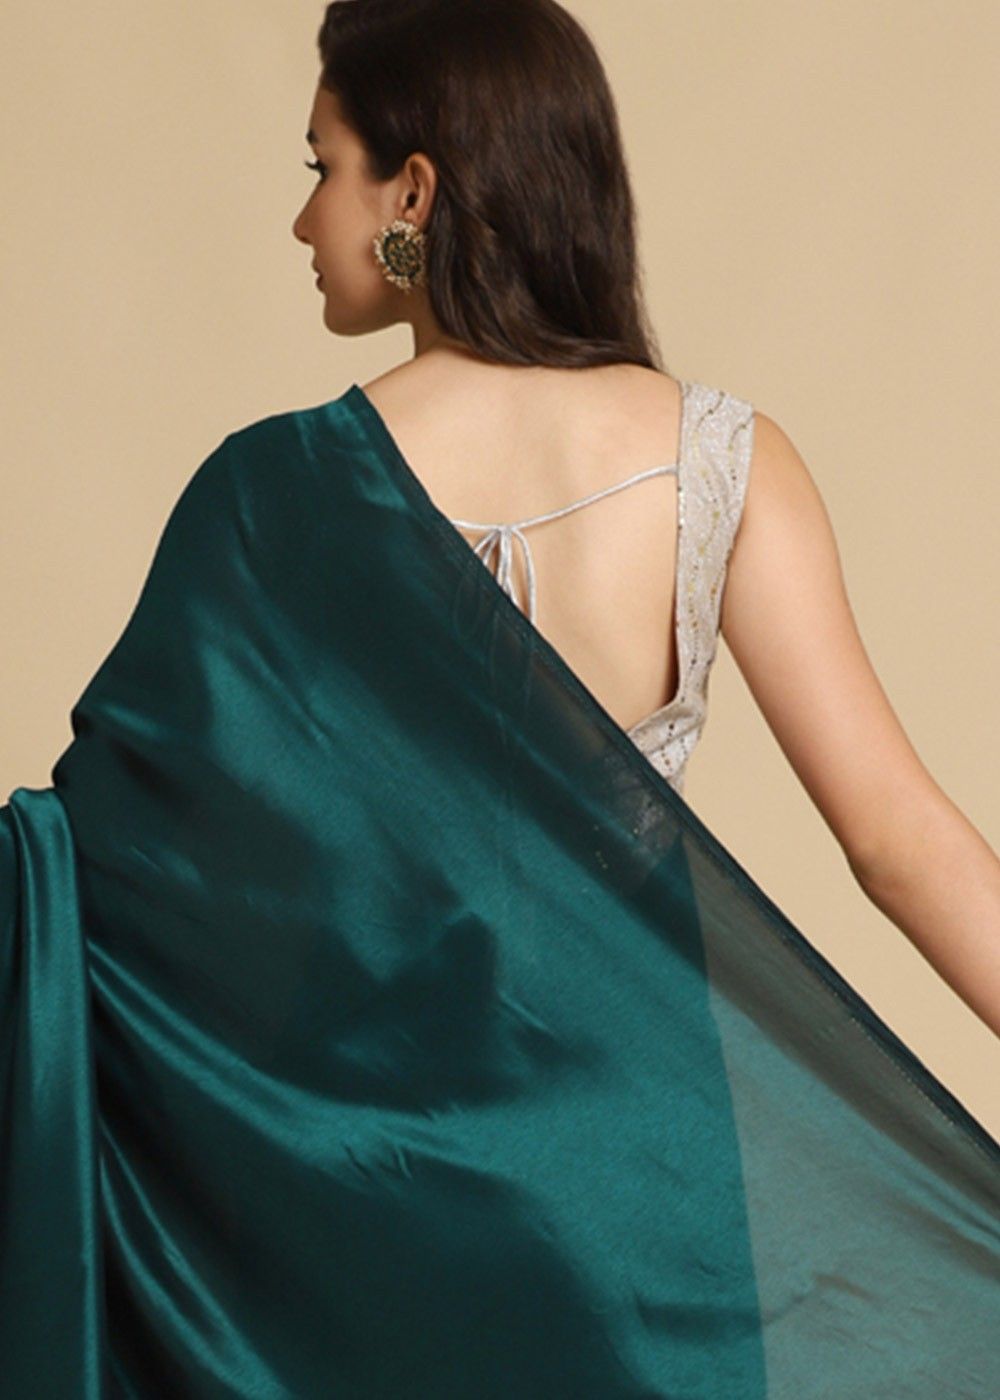 Half N Half Sarees Online Shopping - Buy Half N Half Sarees at Affordable  Prices: IndianClothStore.com